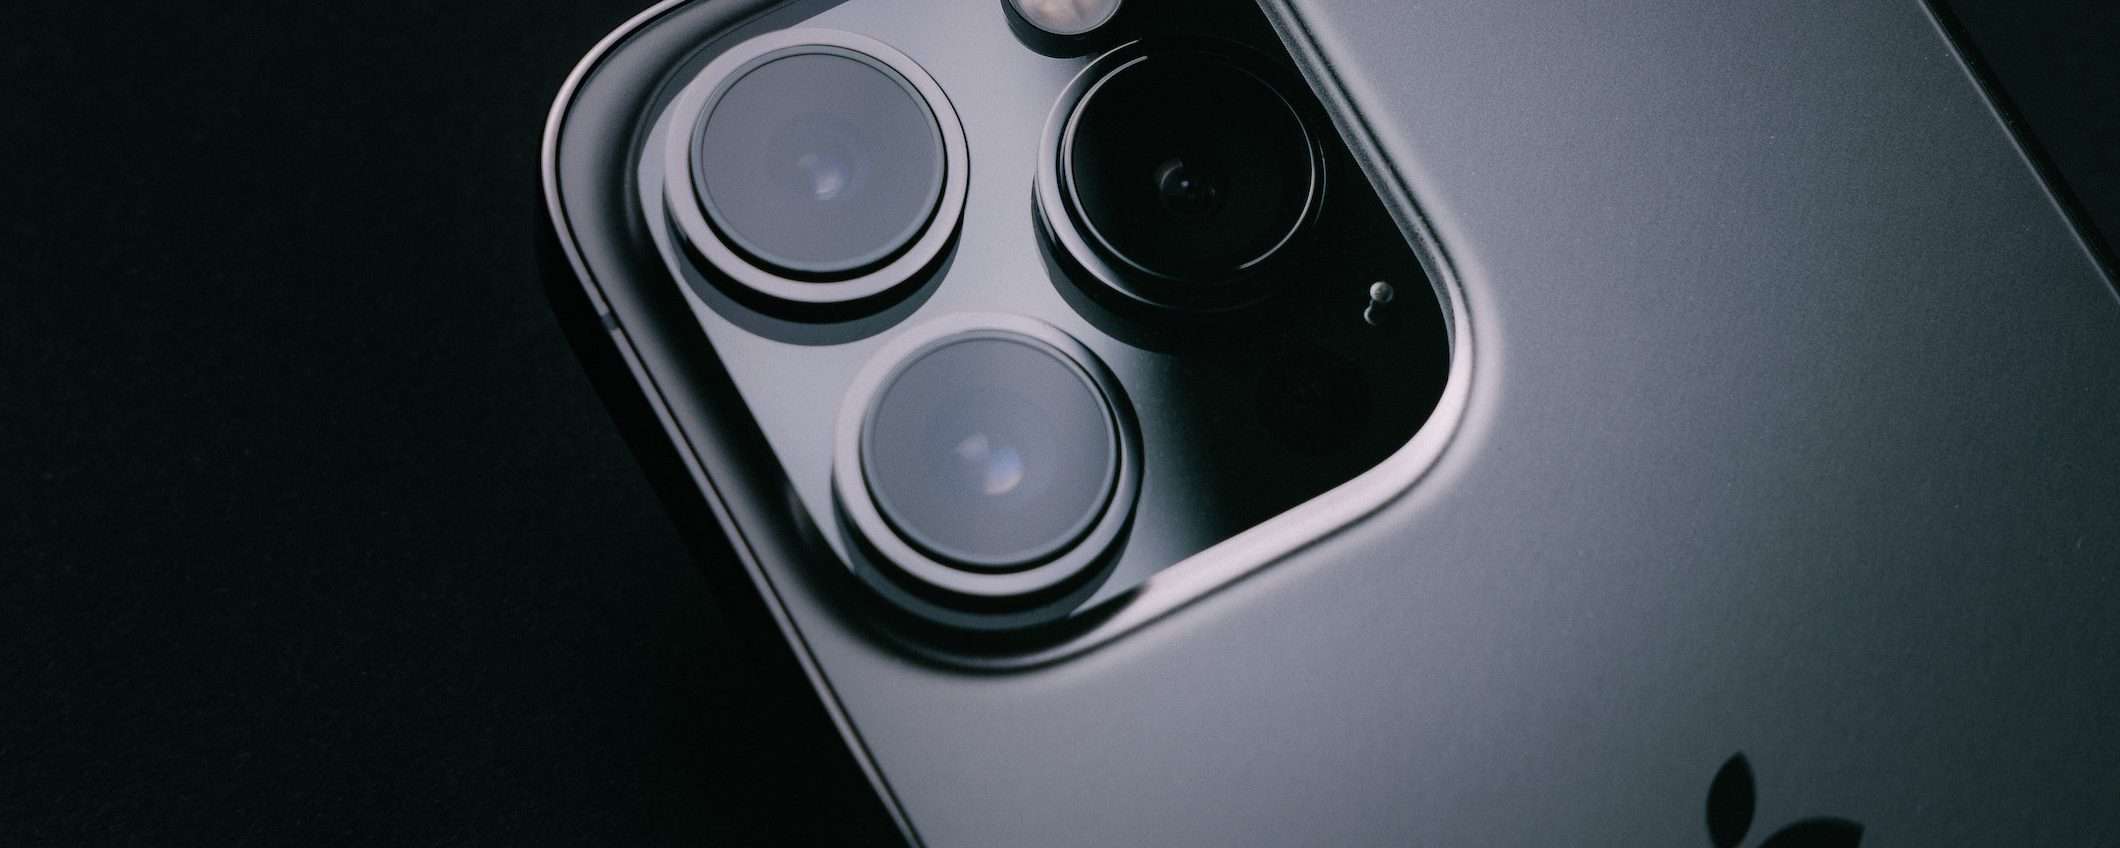 iPhone 14: problemi di produzione per le fotocamere